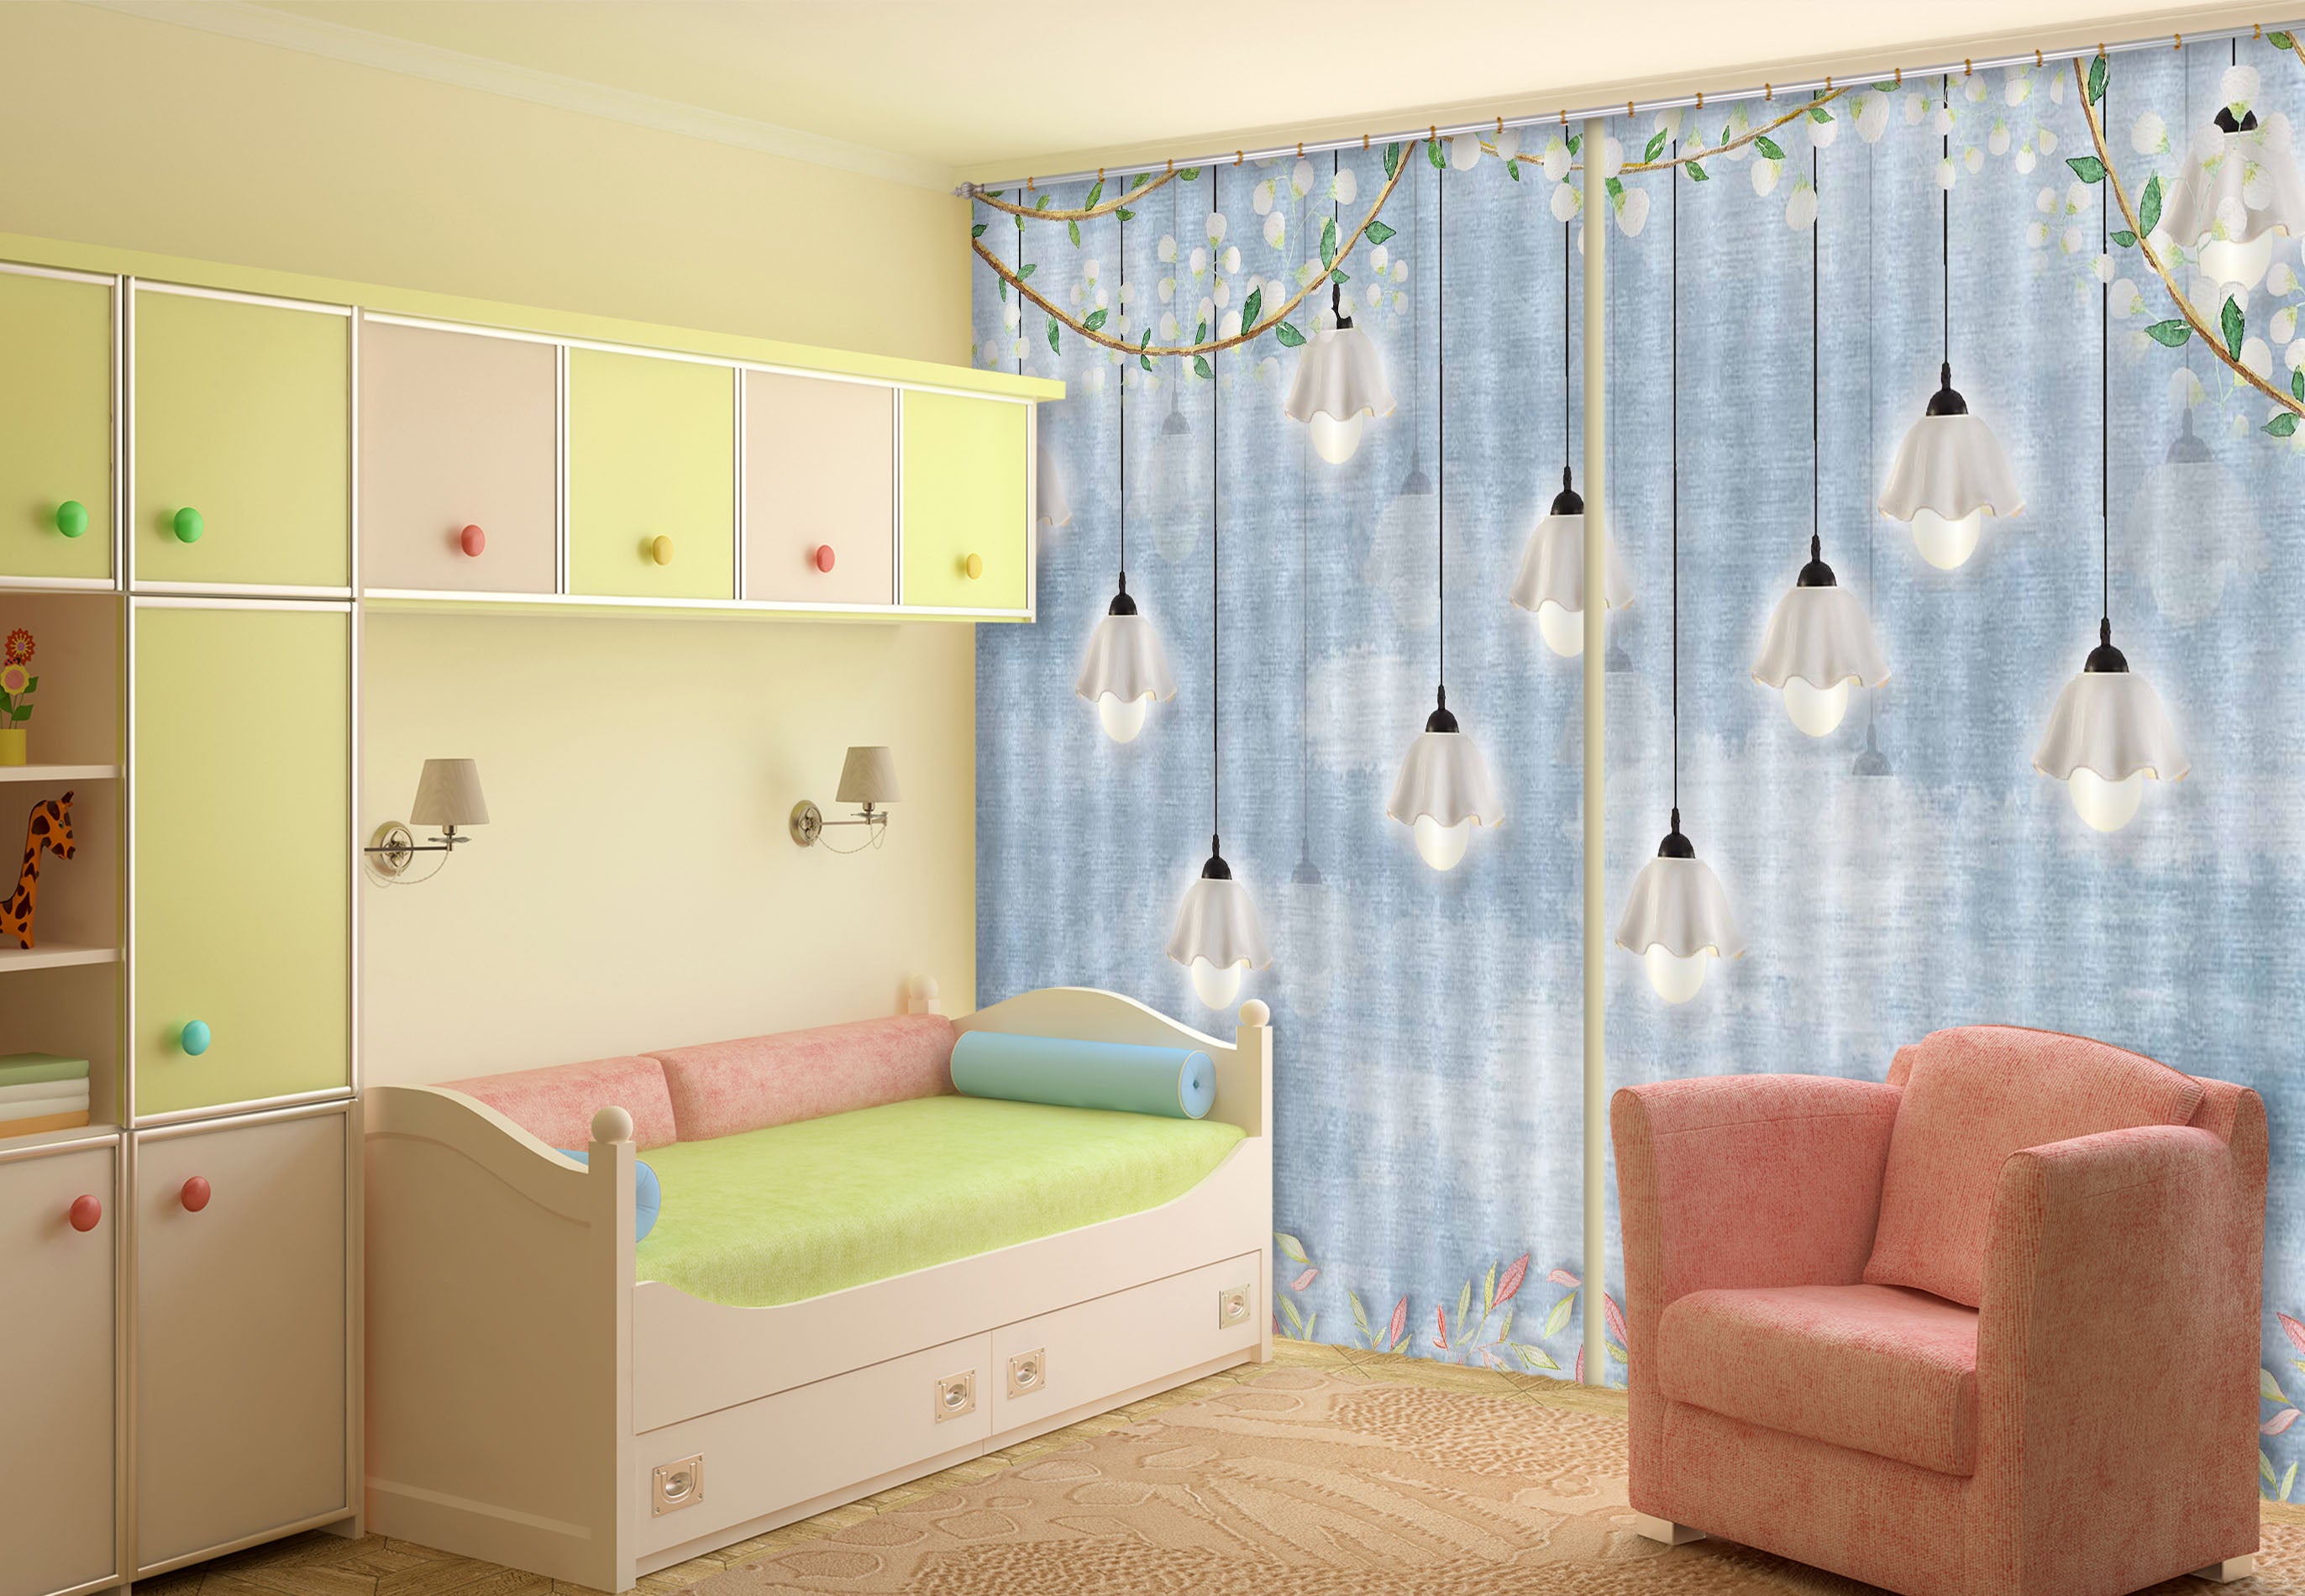 3D White Light 749 Curtains Drapes